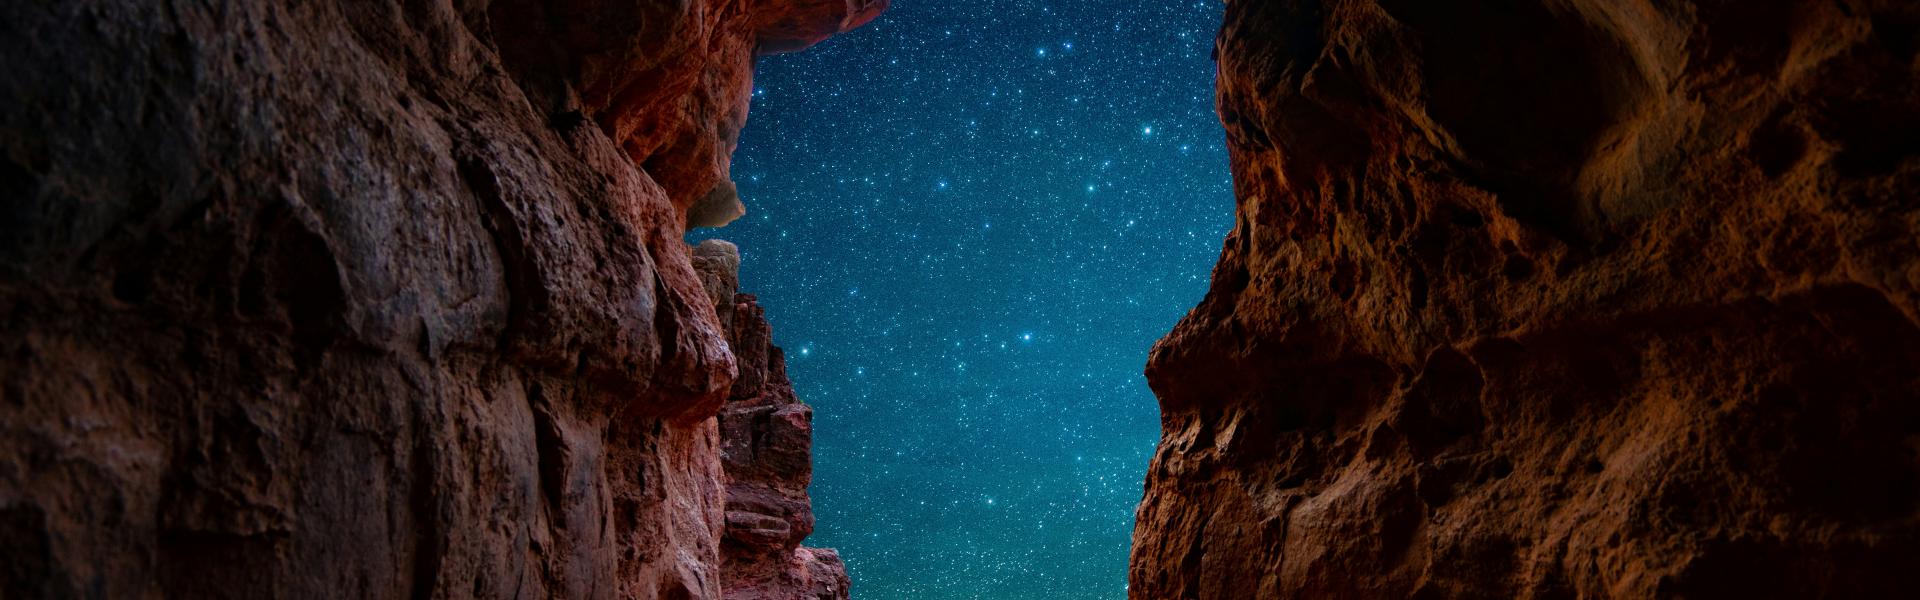 stargazing cave in arizona